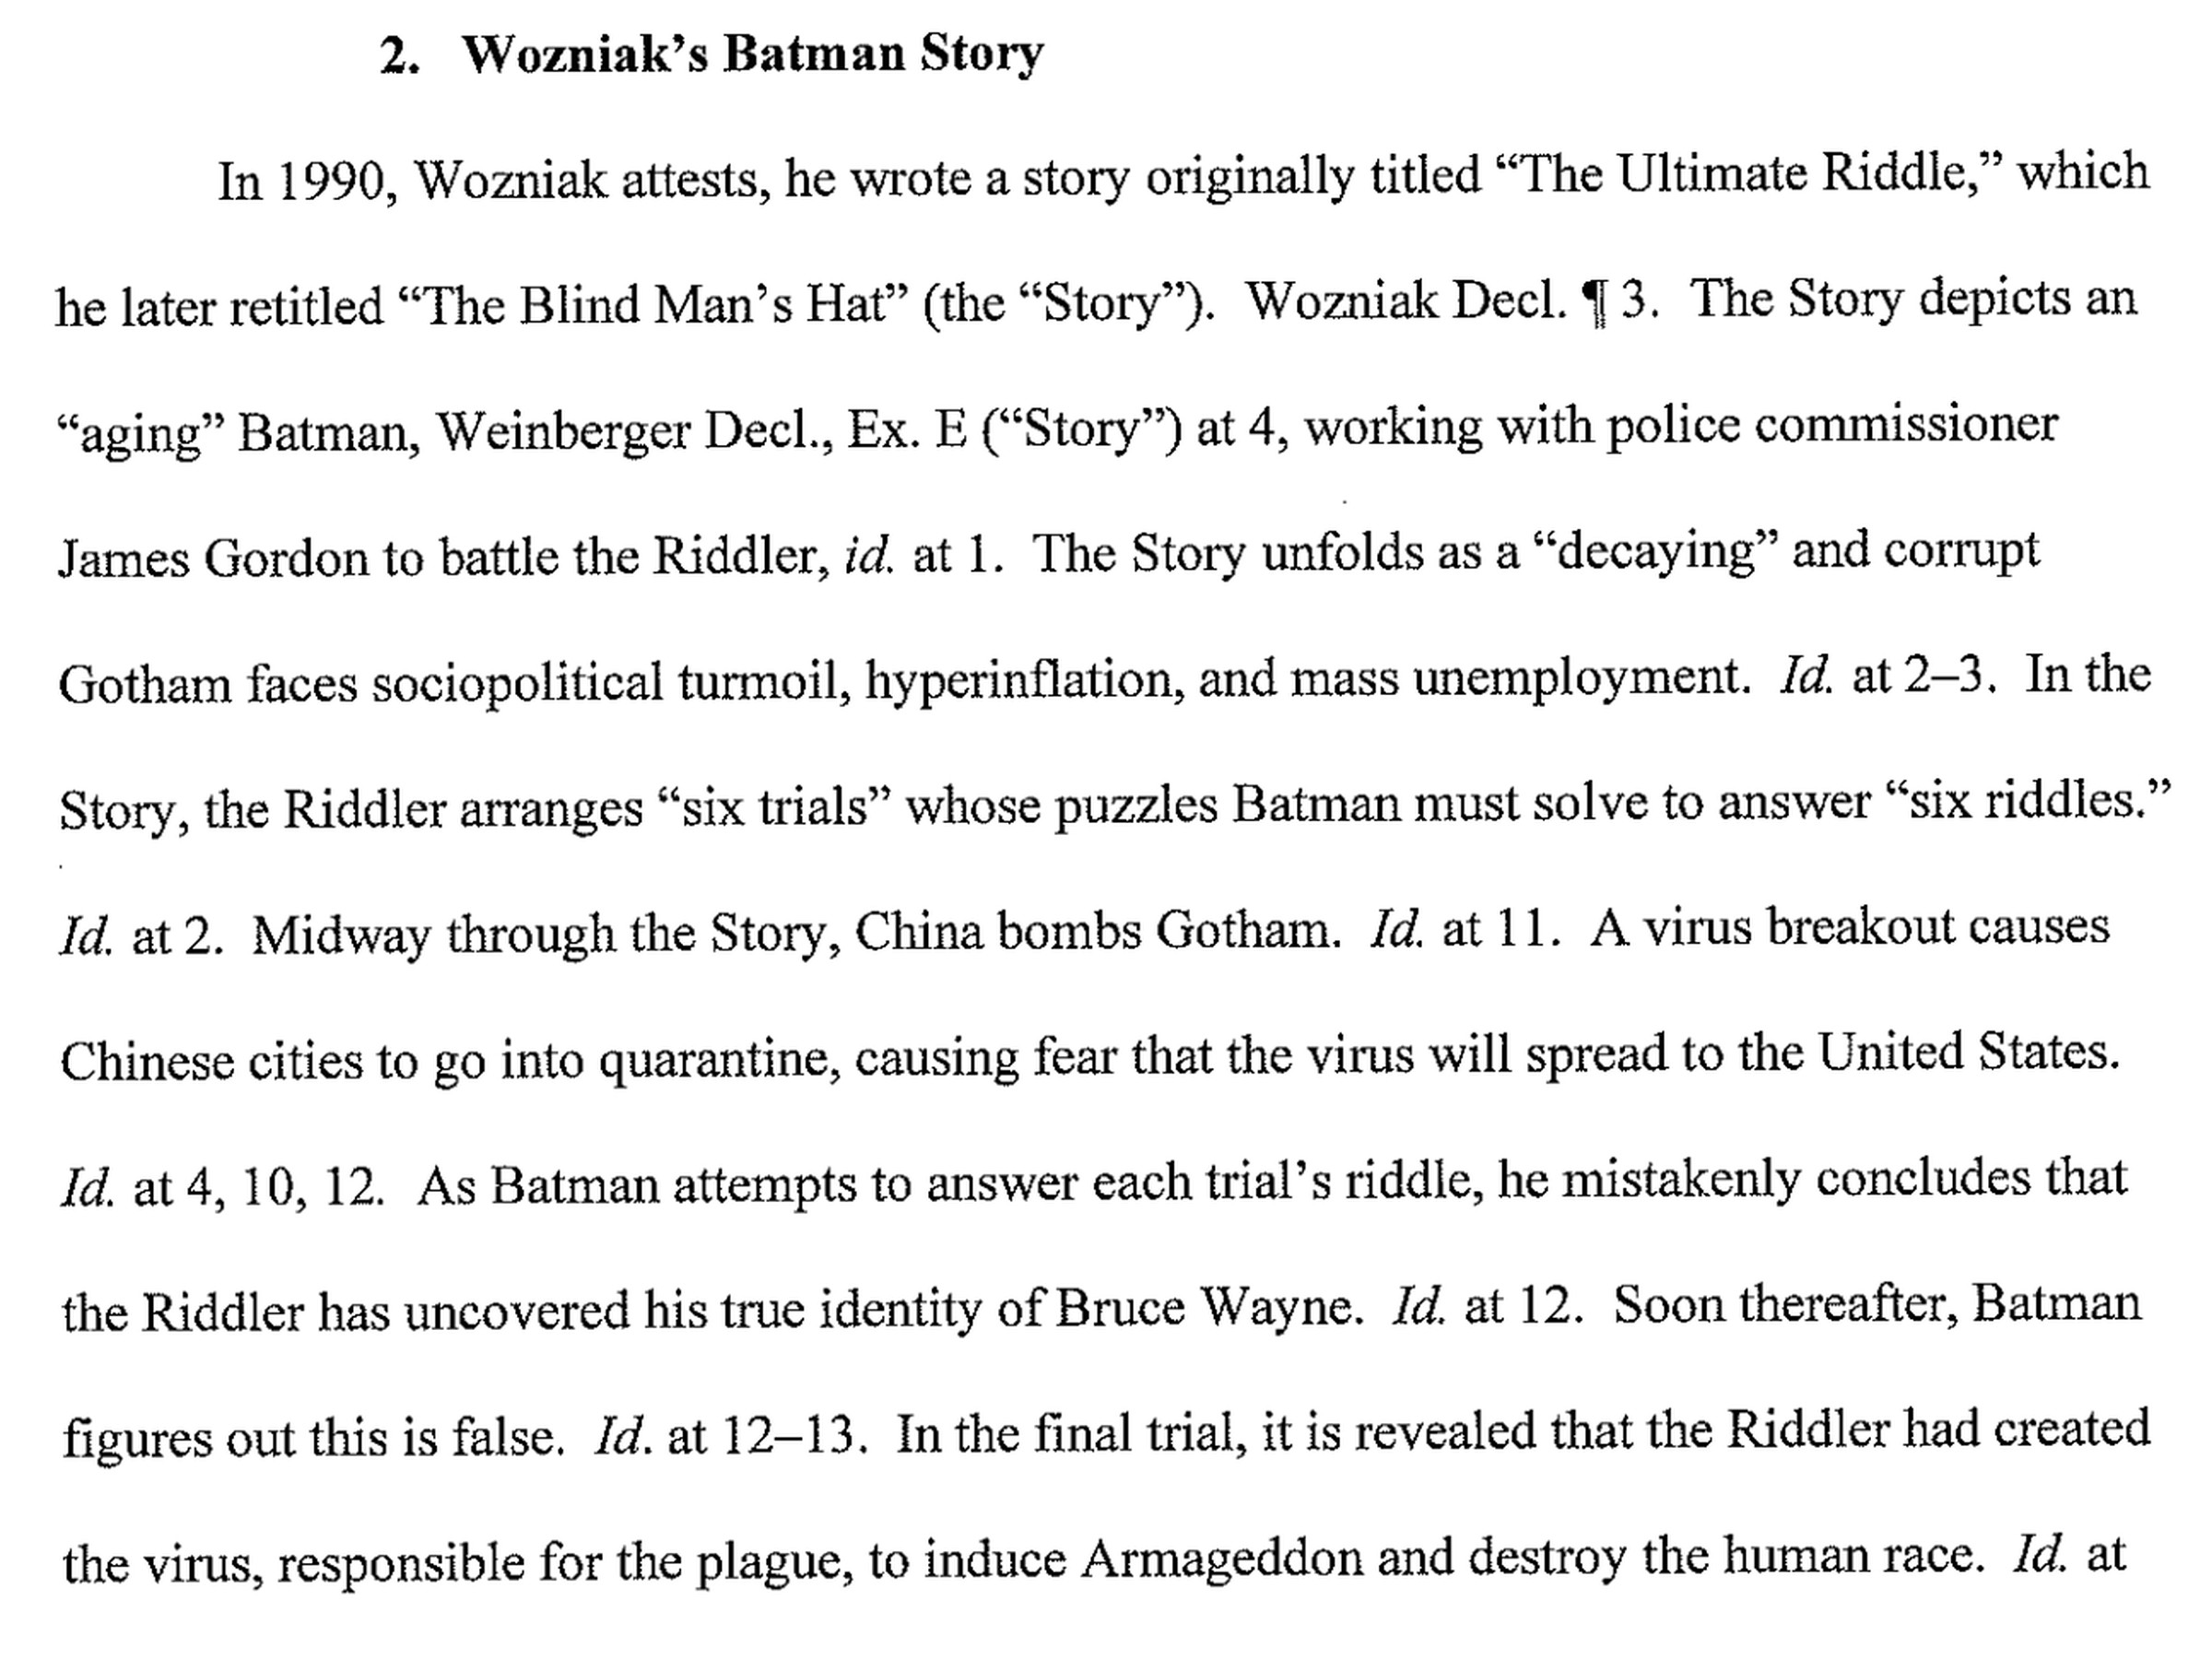 A summary of the plaintiff’s Batman story.